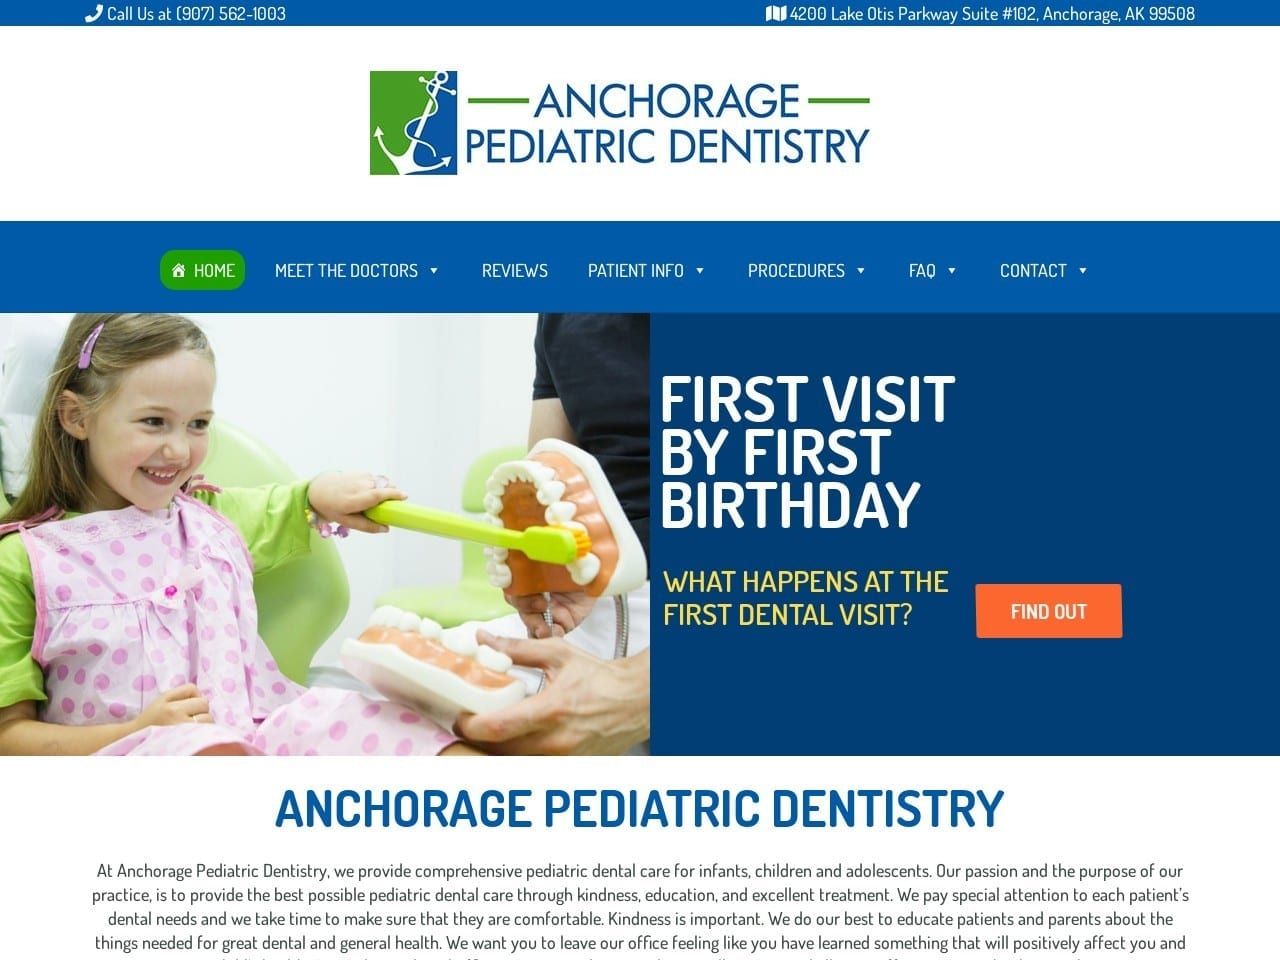 Anchorage Pediatric Dentist Website Screenshot from anchoragepediatricdentistry.com